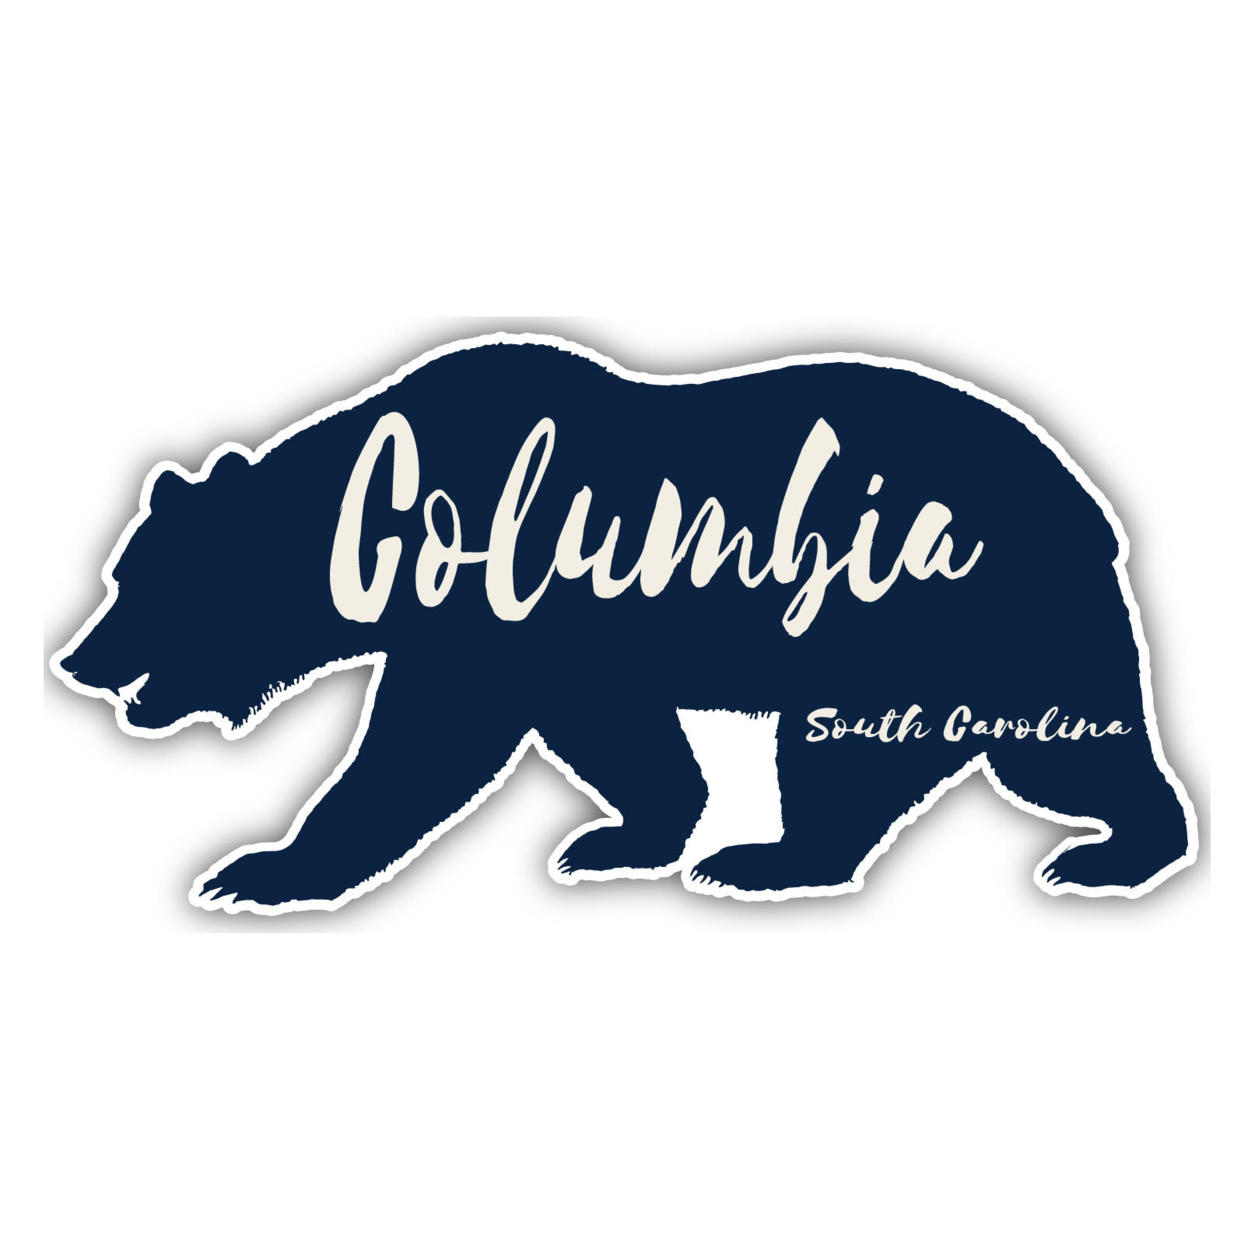 Columbia South Carolina Souvenir Decorative Stickers (Choose Theme And Size) - Single Unit, 2-Inch, Bear